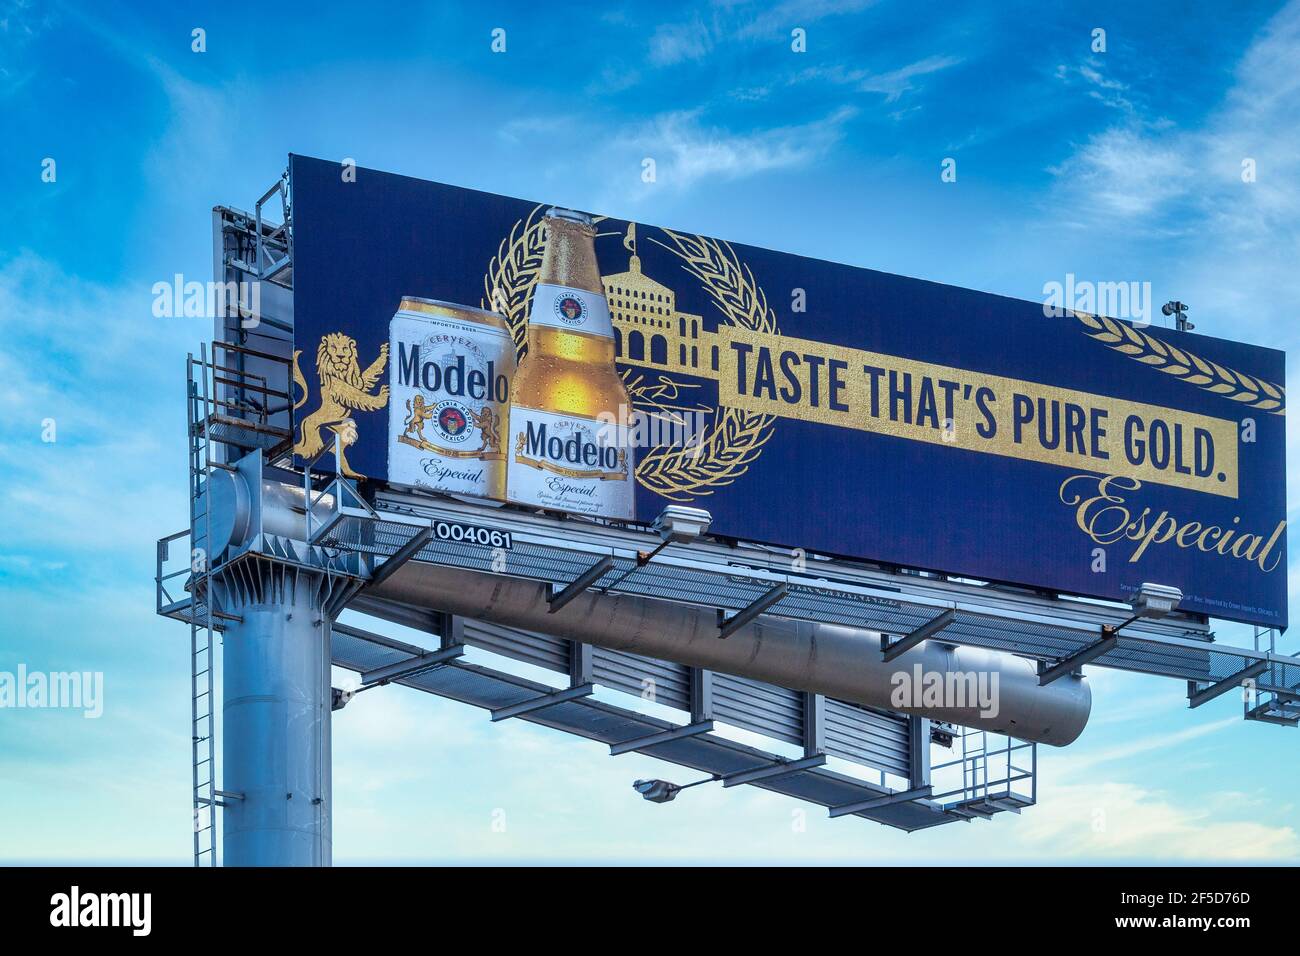 Large billboard advertising the Modelo Beer, Miami, Florida, USA Stock Photo